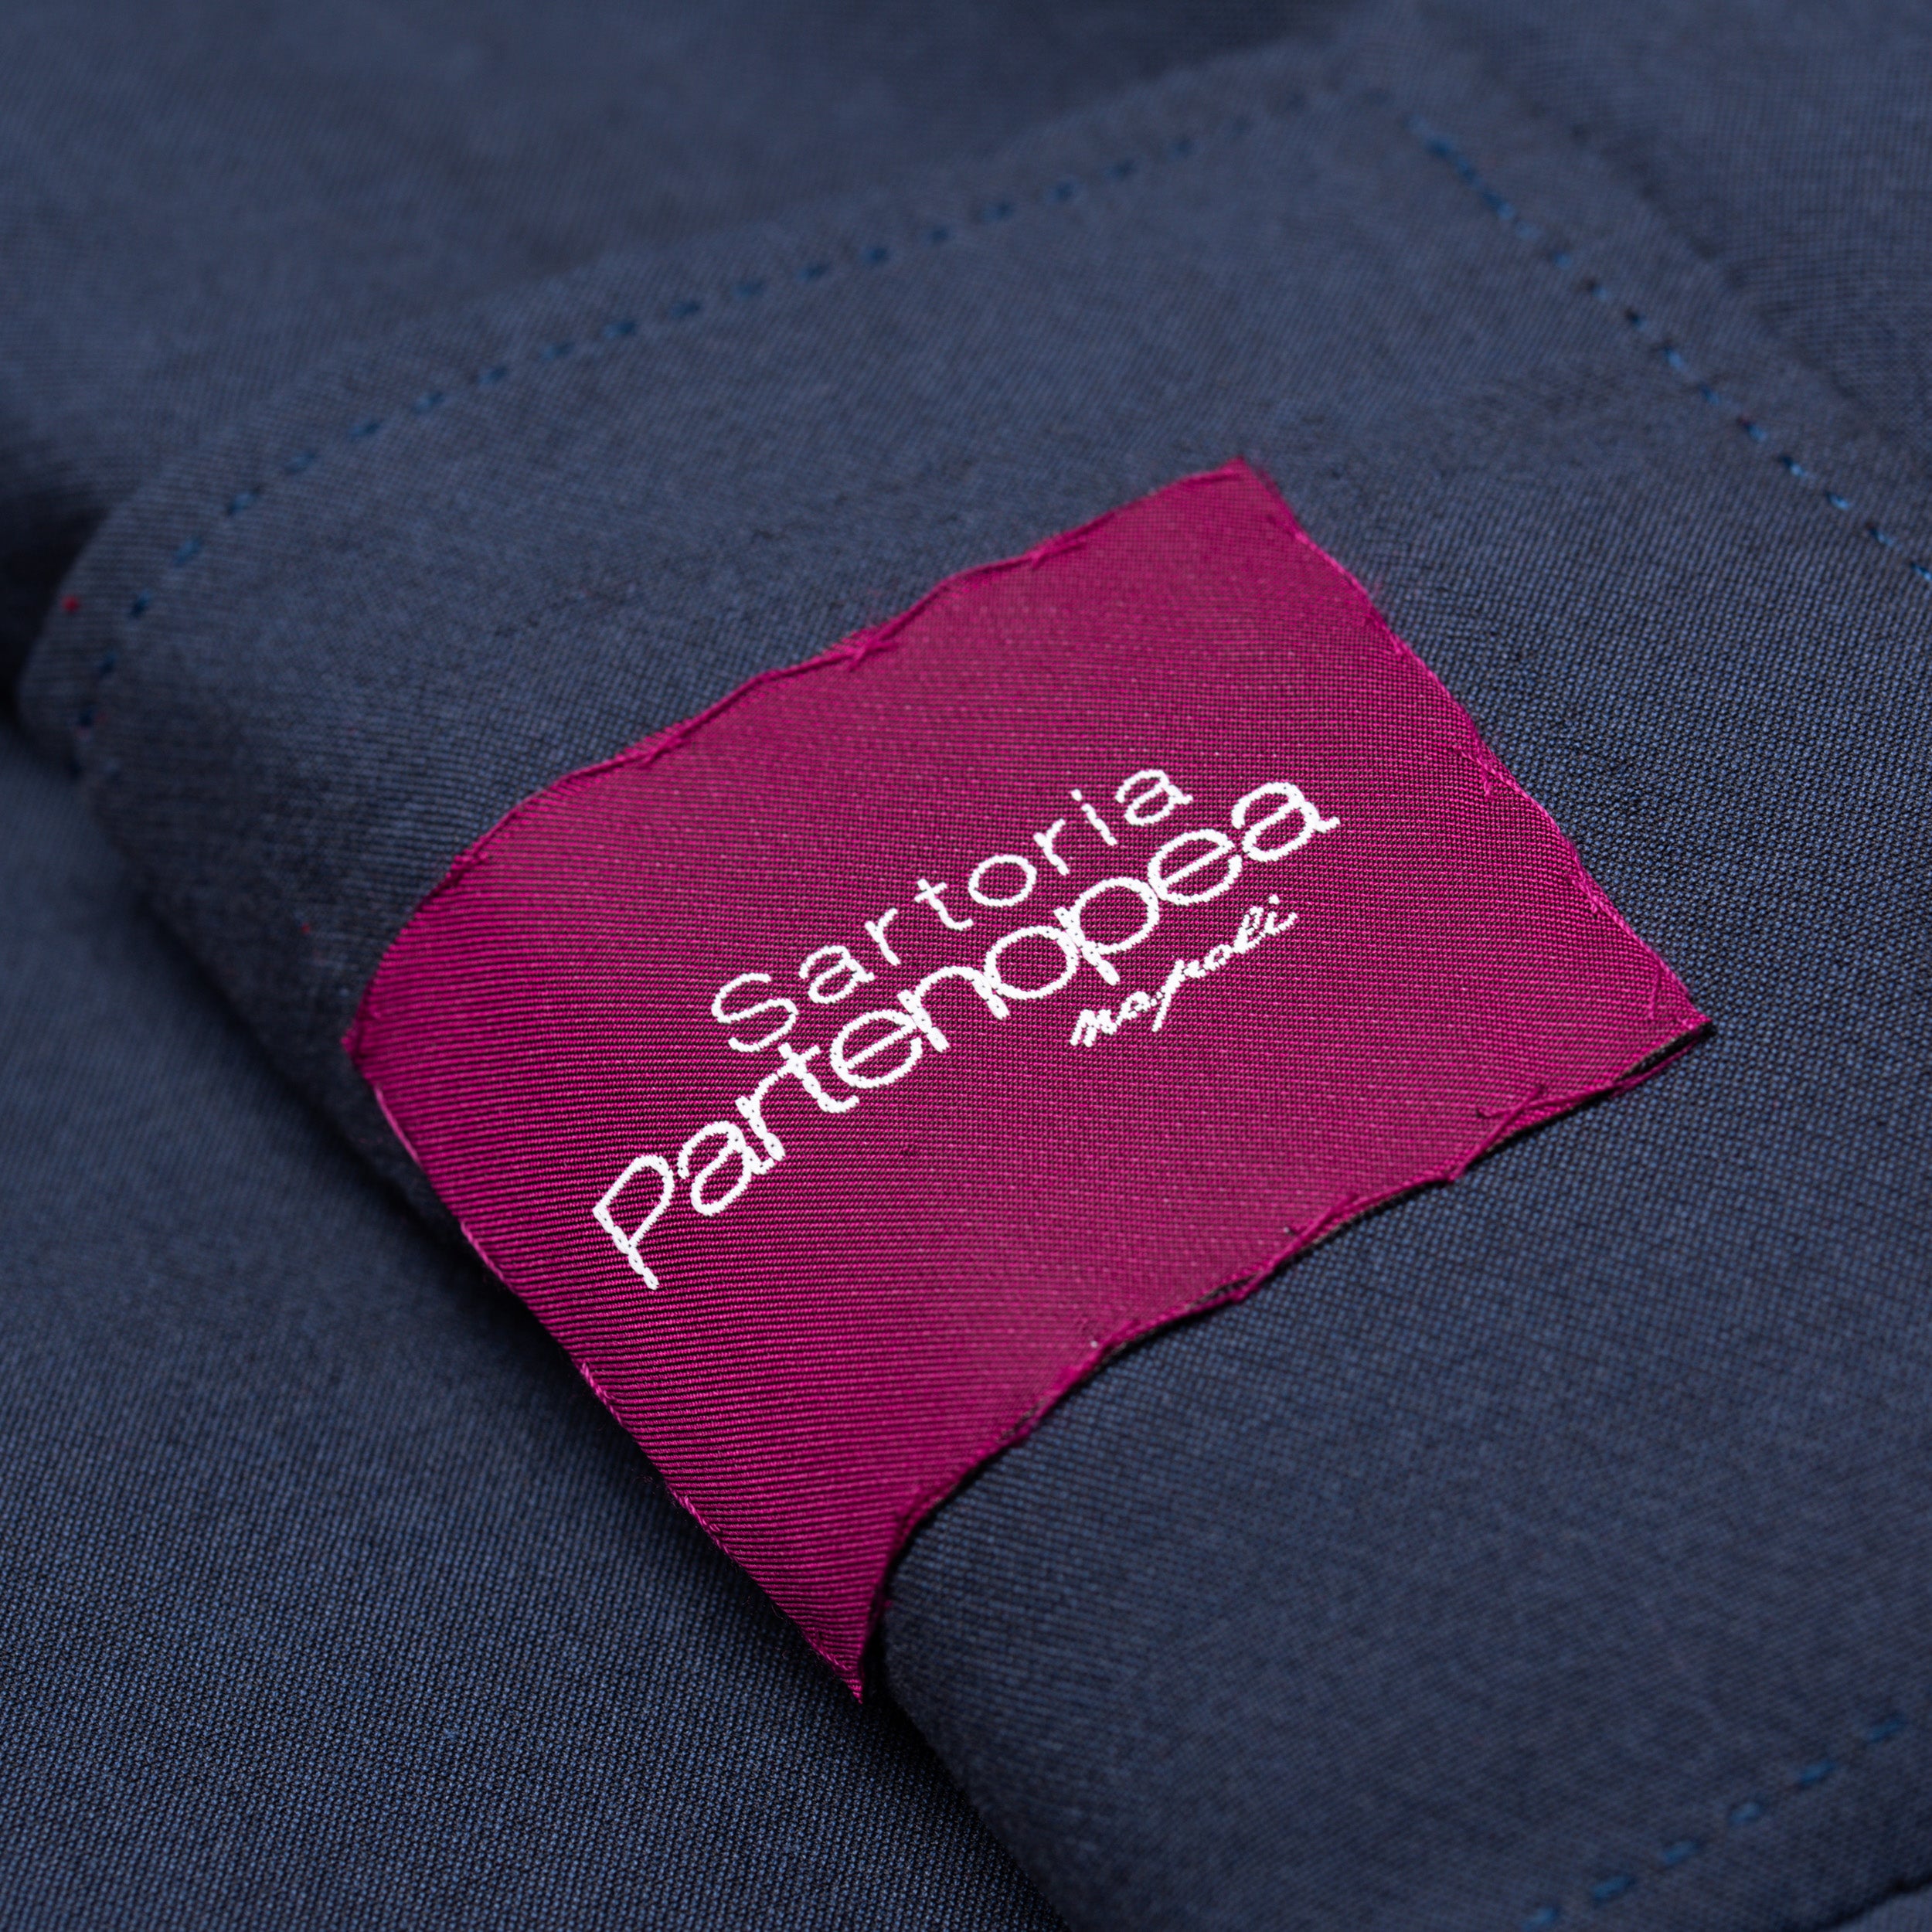 Sartoria PARTENOPEA Red Cotton Linen Unconstructed Summer Jacket 50 NEW 40 SARTORIA PARTENOPEA